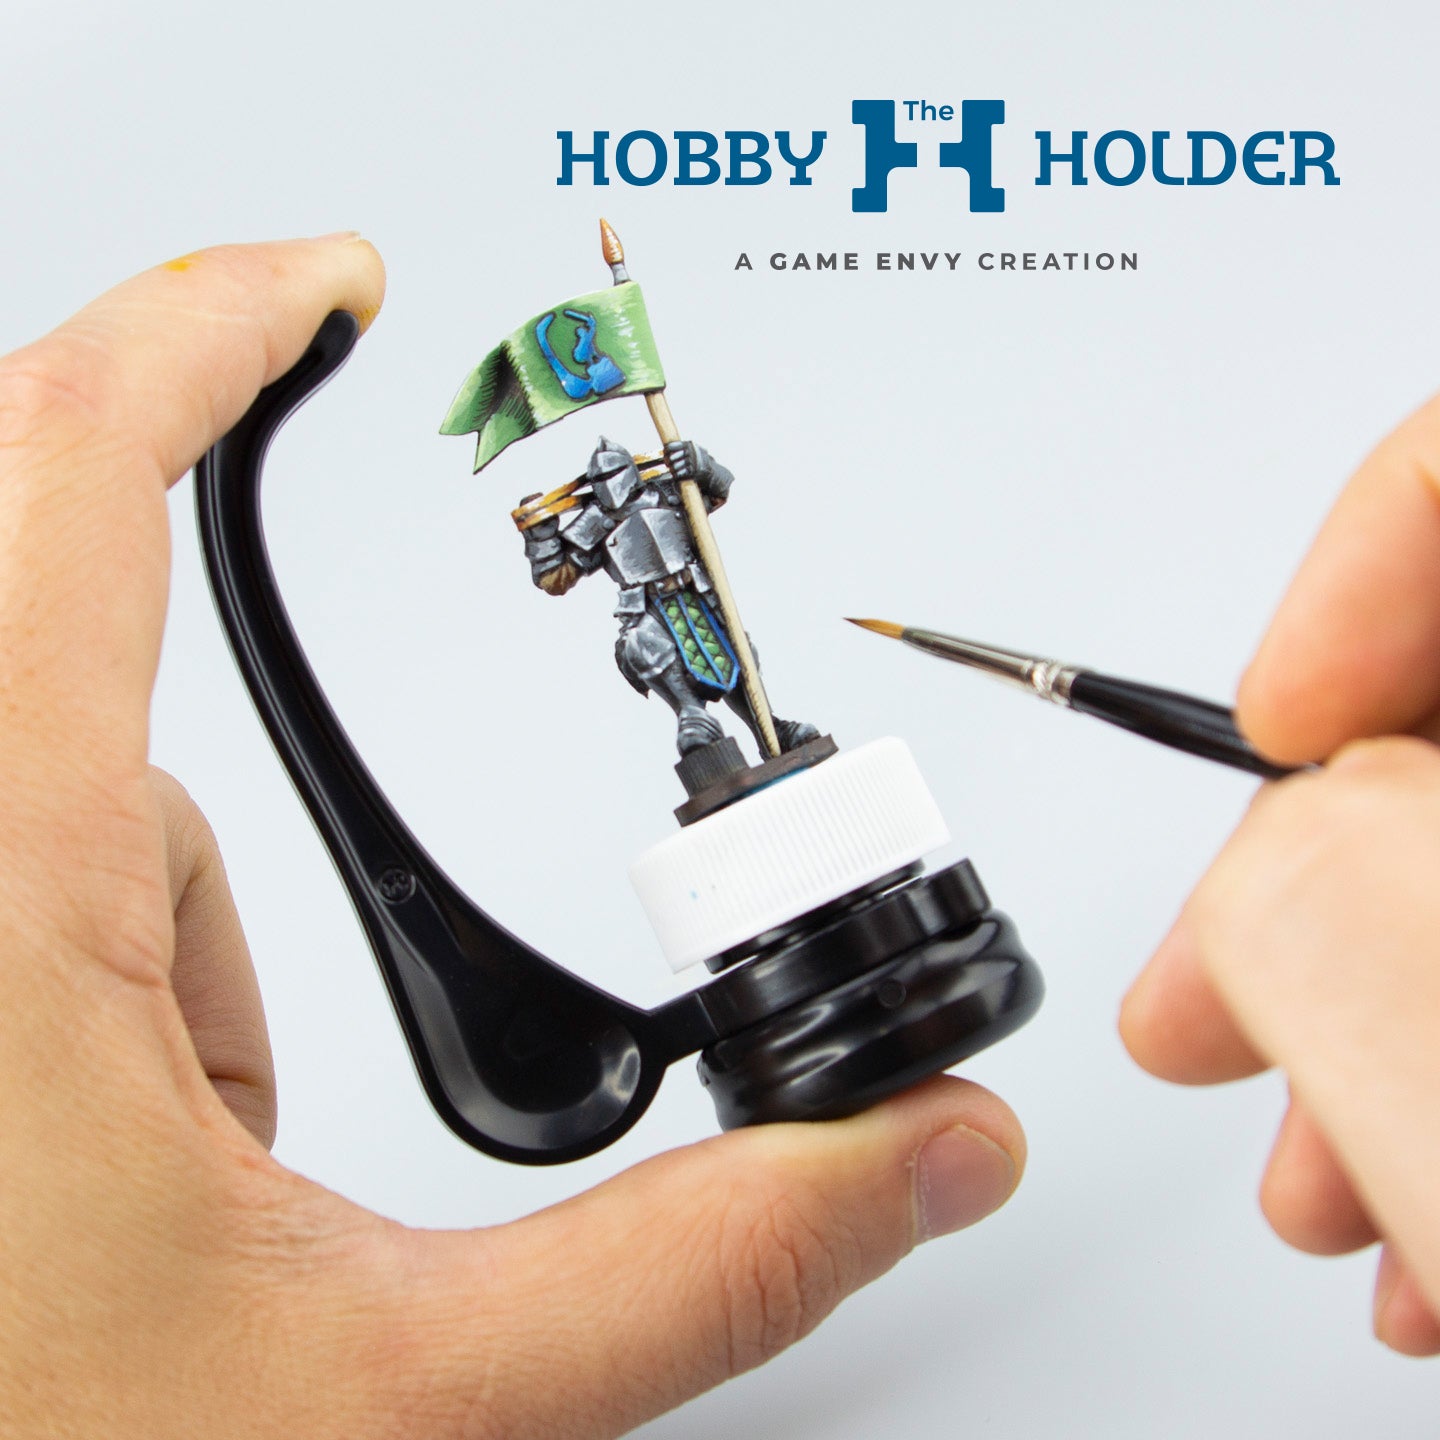 Hobby Holder by GameEnvy